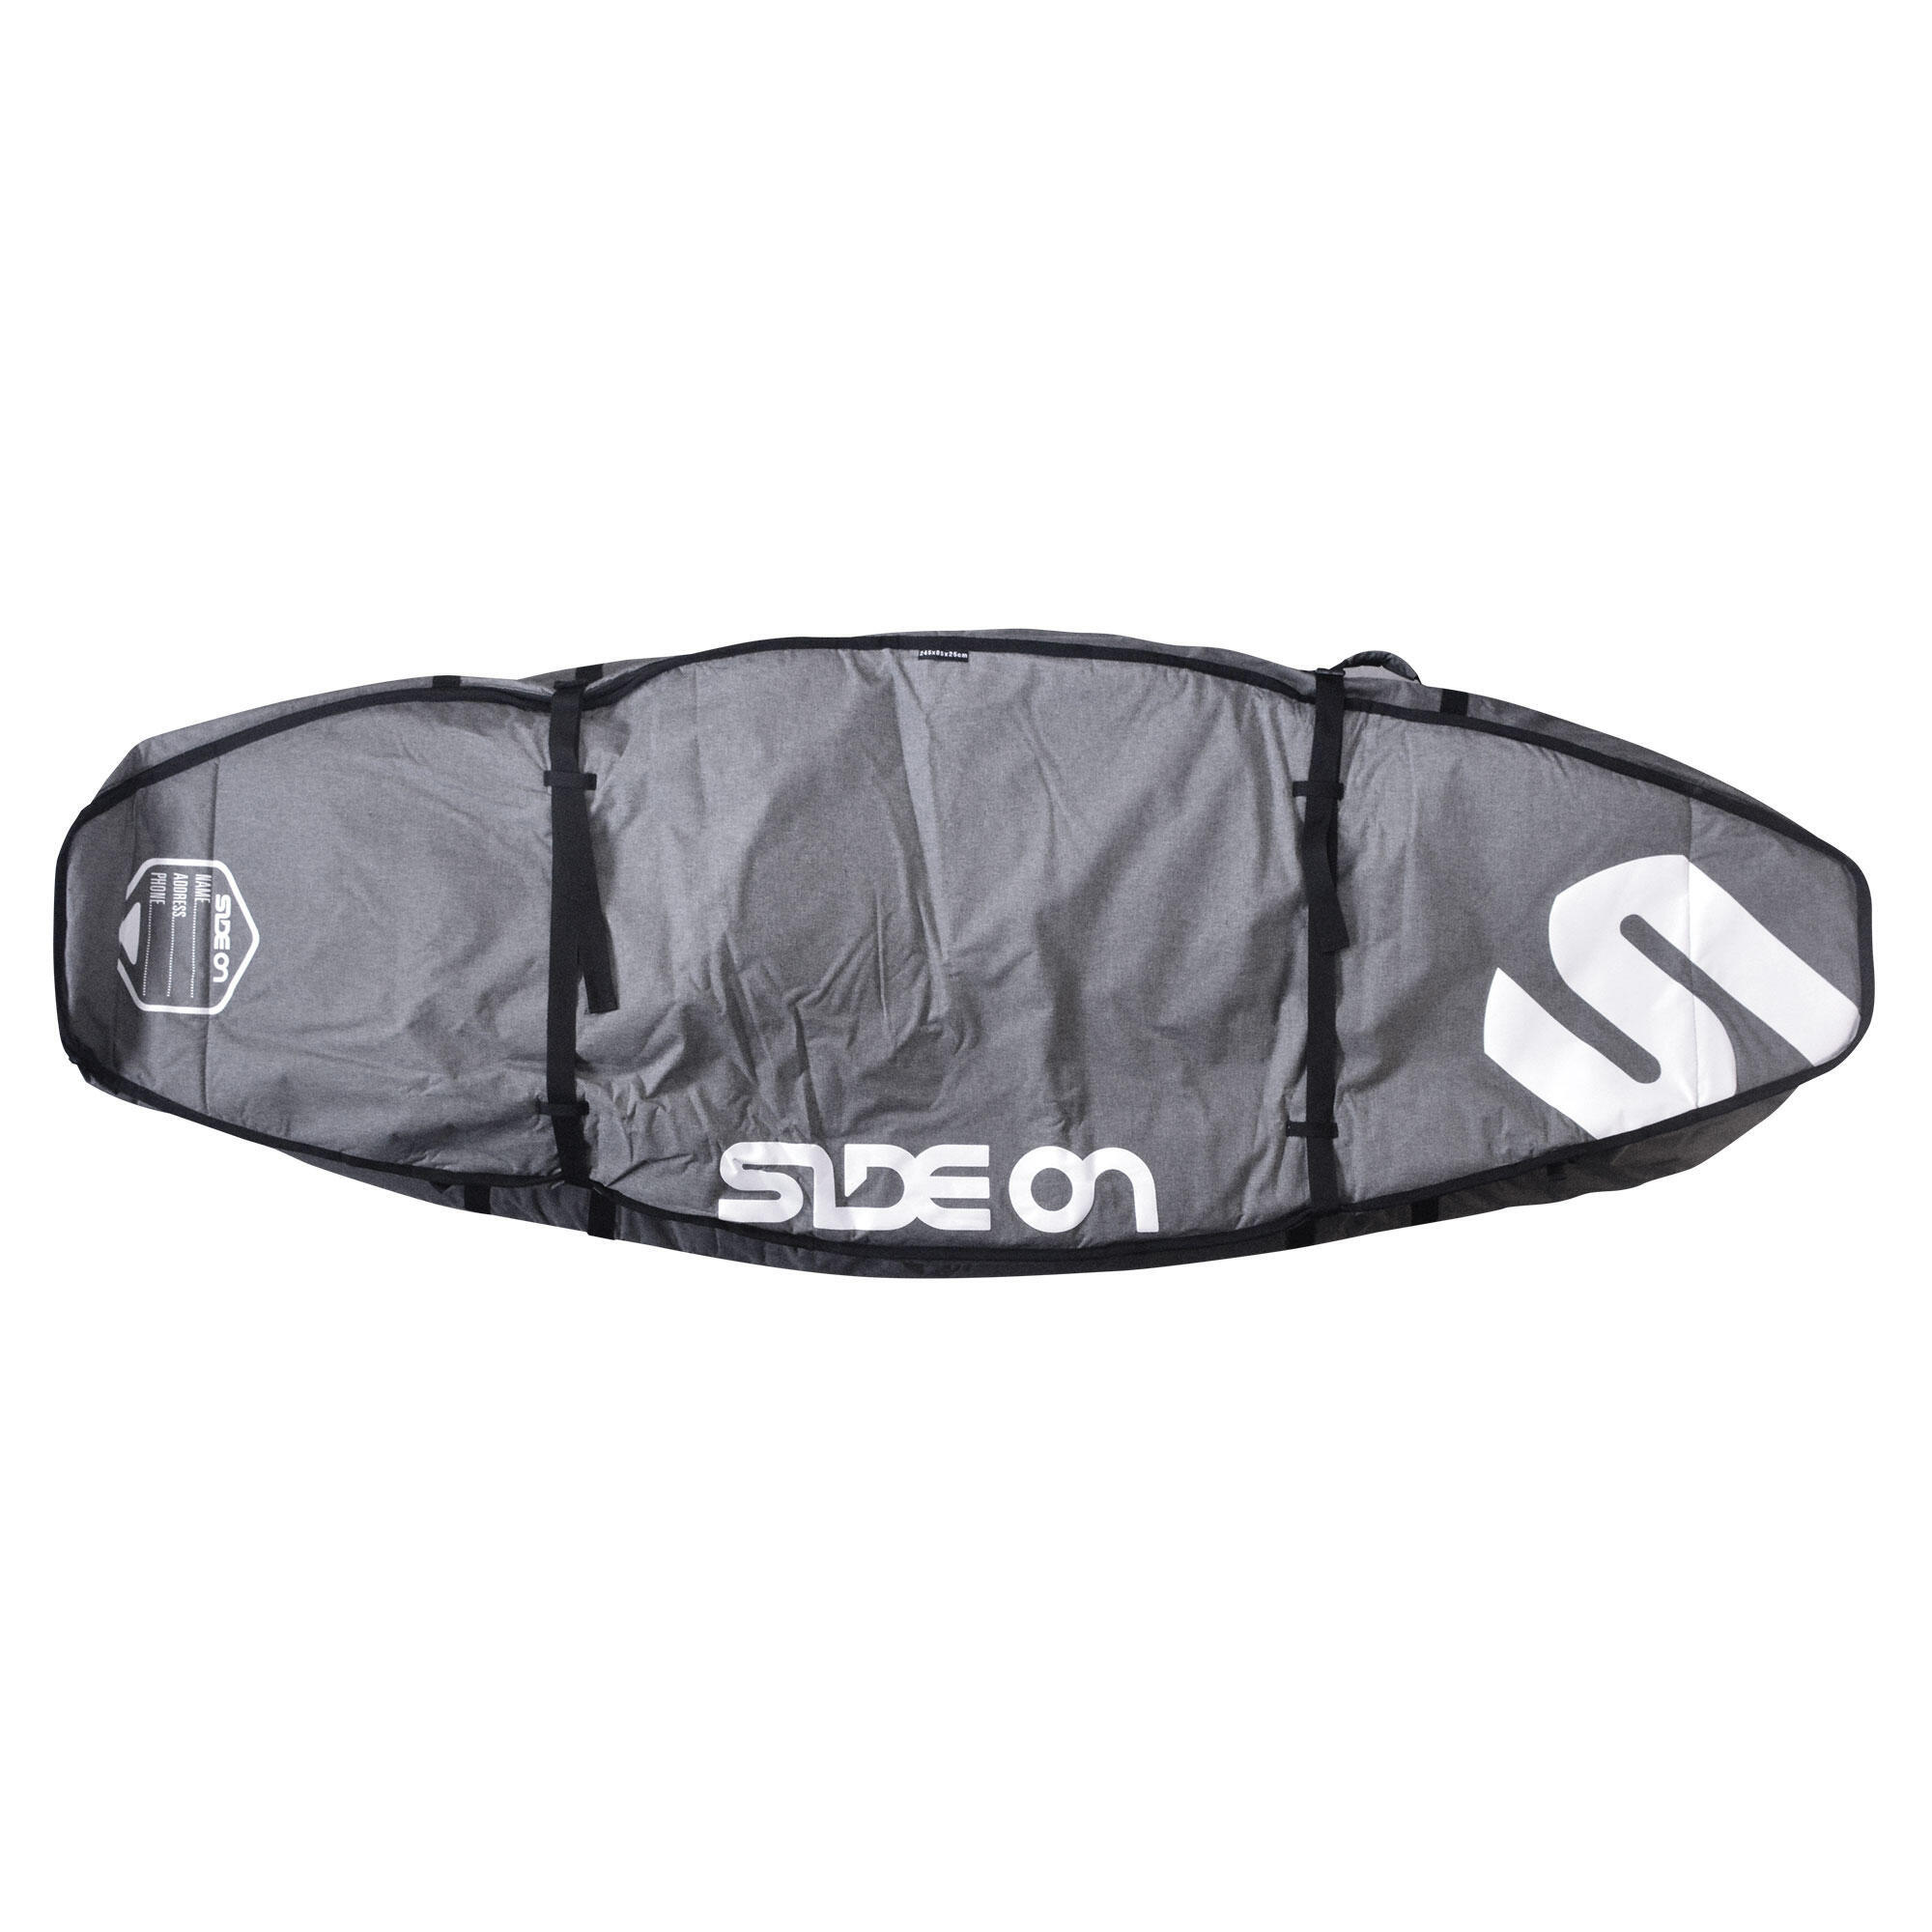 Boardbag доска для виндсерфинга двойной корпус 10 мм 245/65 Side On серый/белый полог брезентовый огнеупорный 5х6